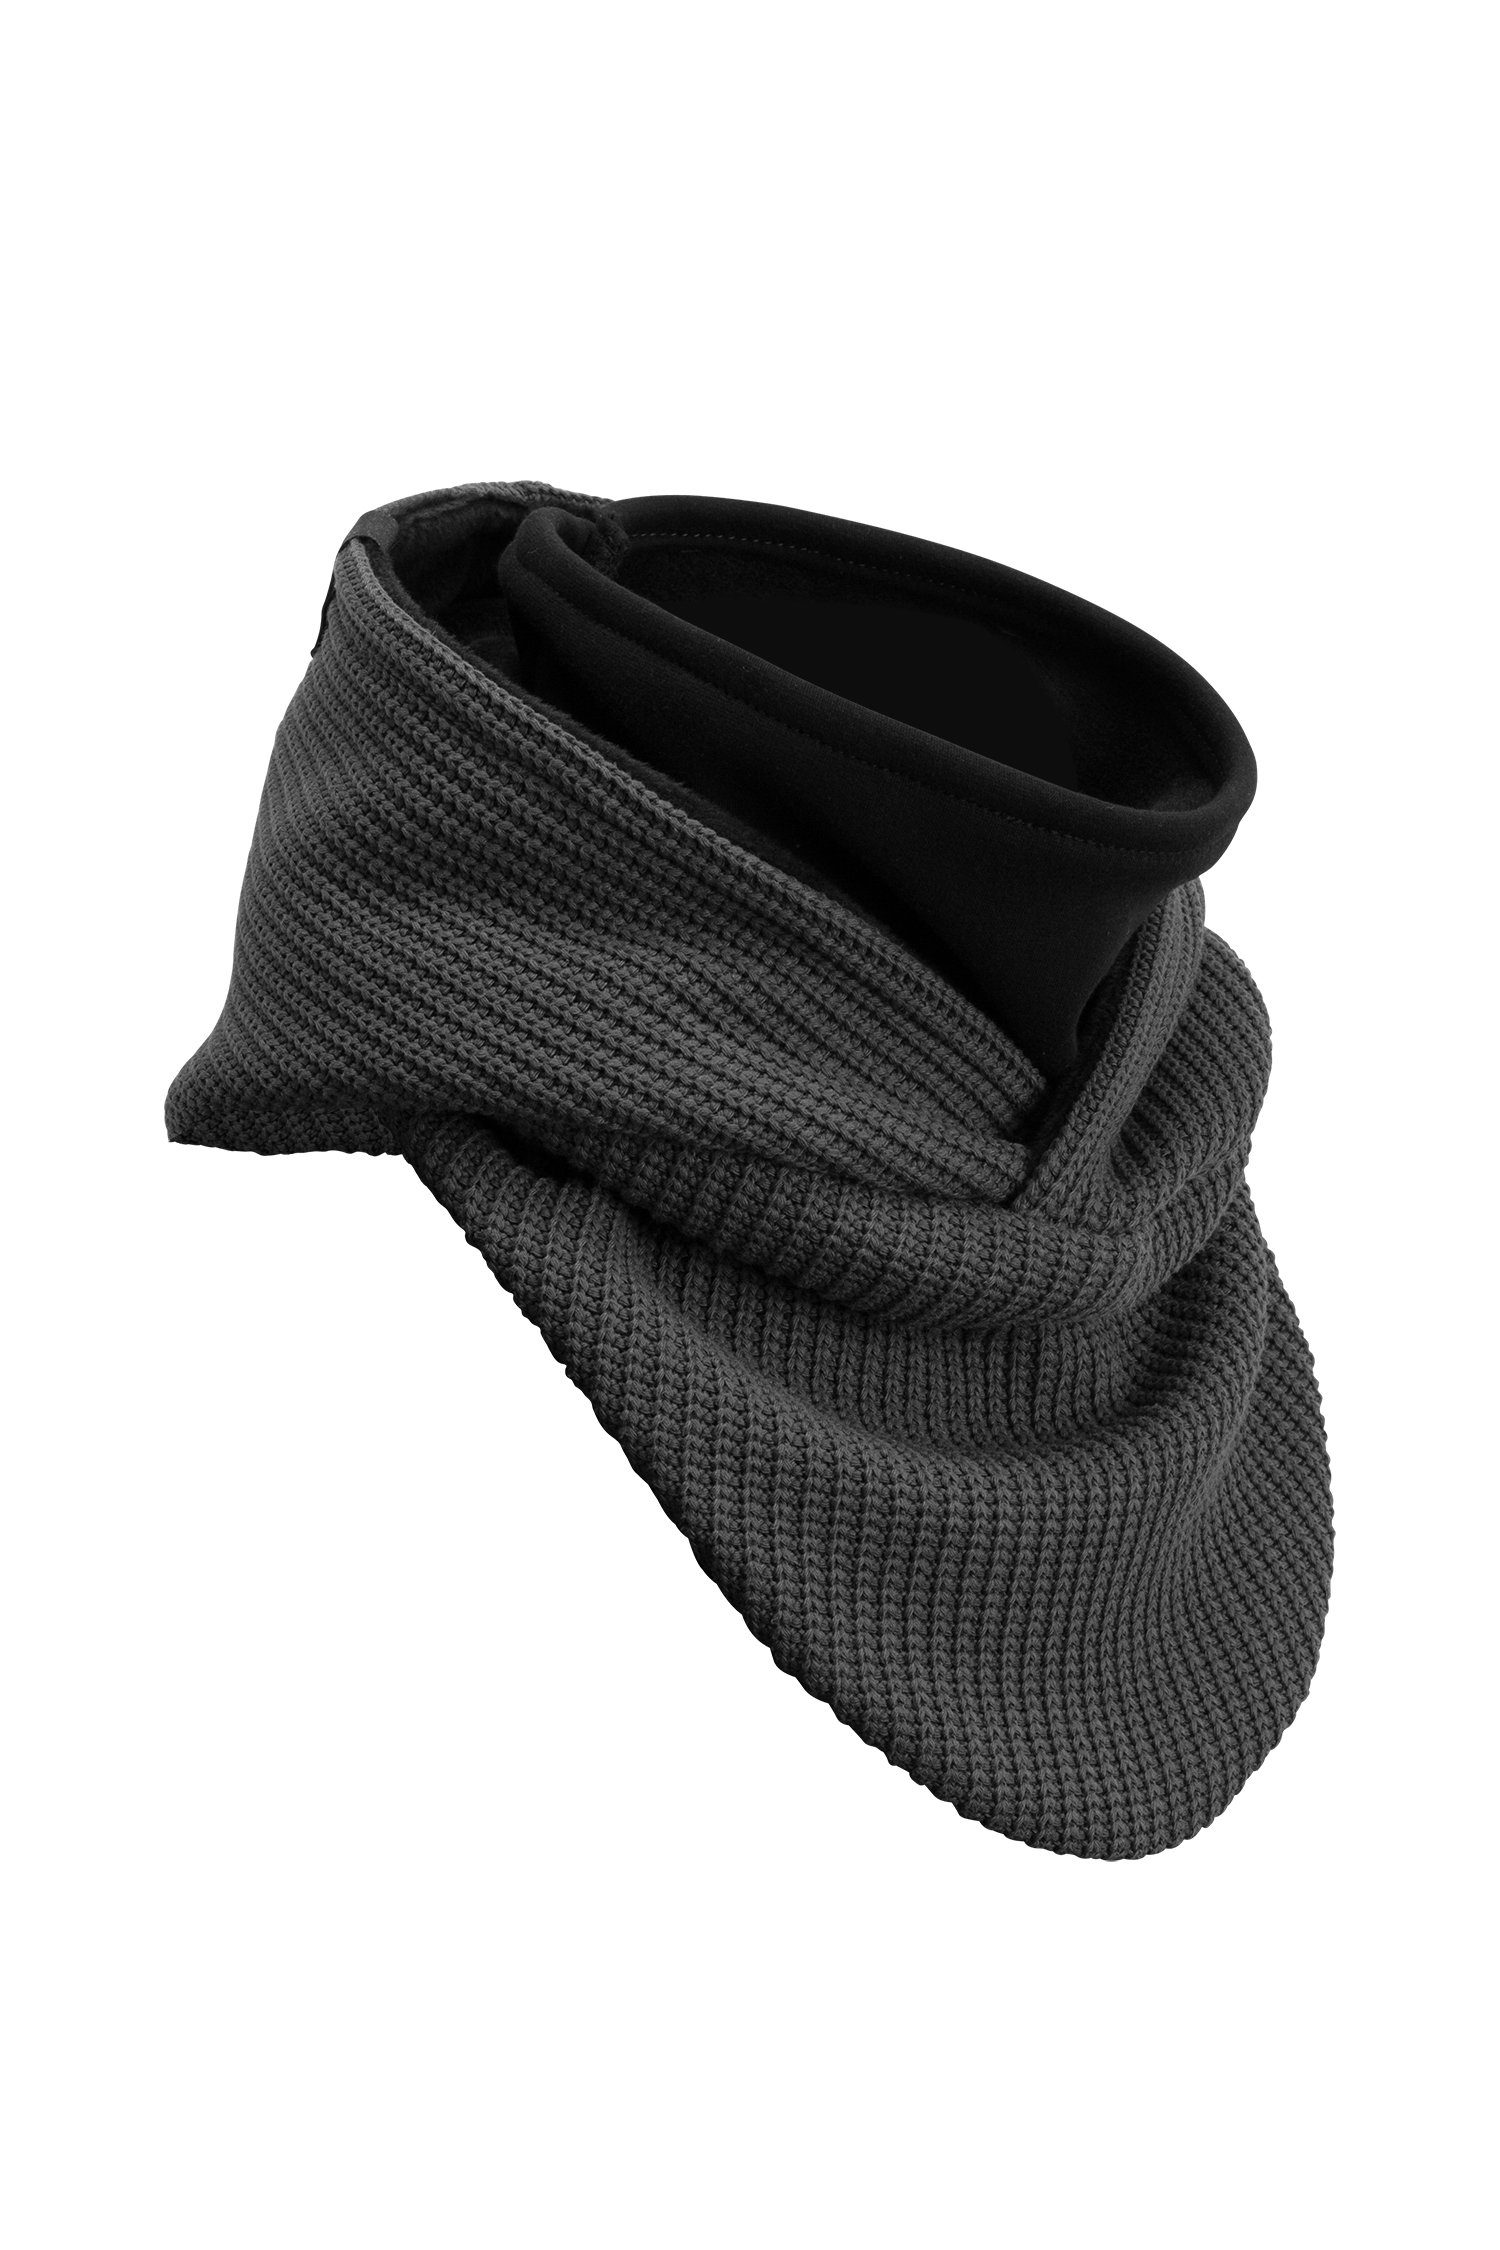 Manufaktur13 Modeschal Knit Hooded Loop - Kapuzenschal, Schal, Strickschal, mit integriertem Windbreaker Grey Storm